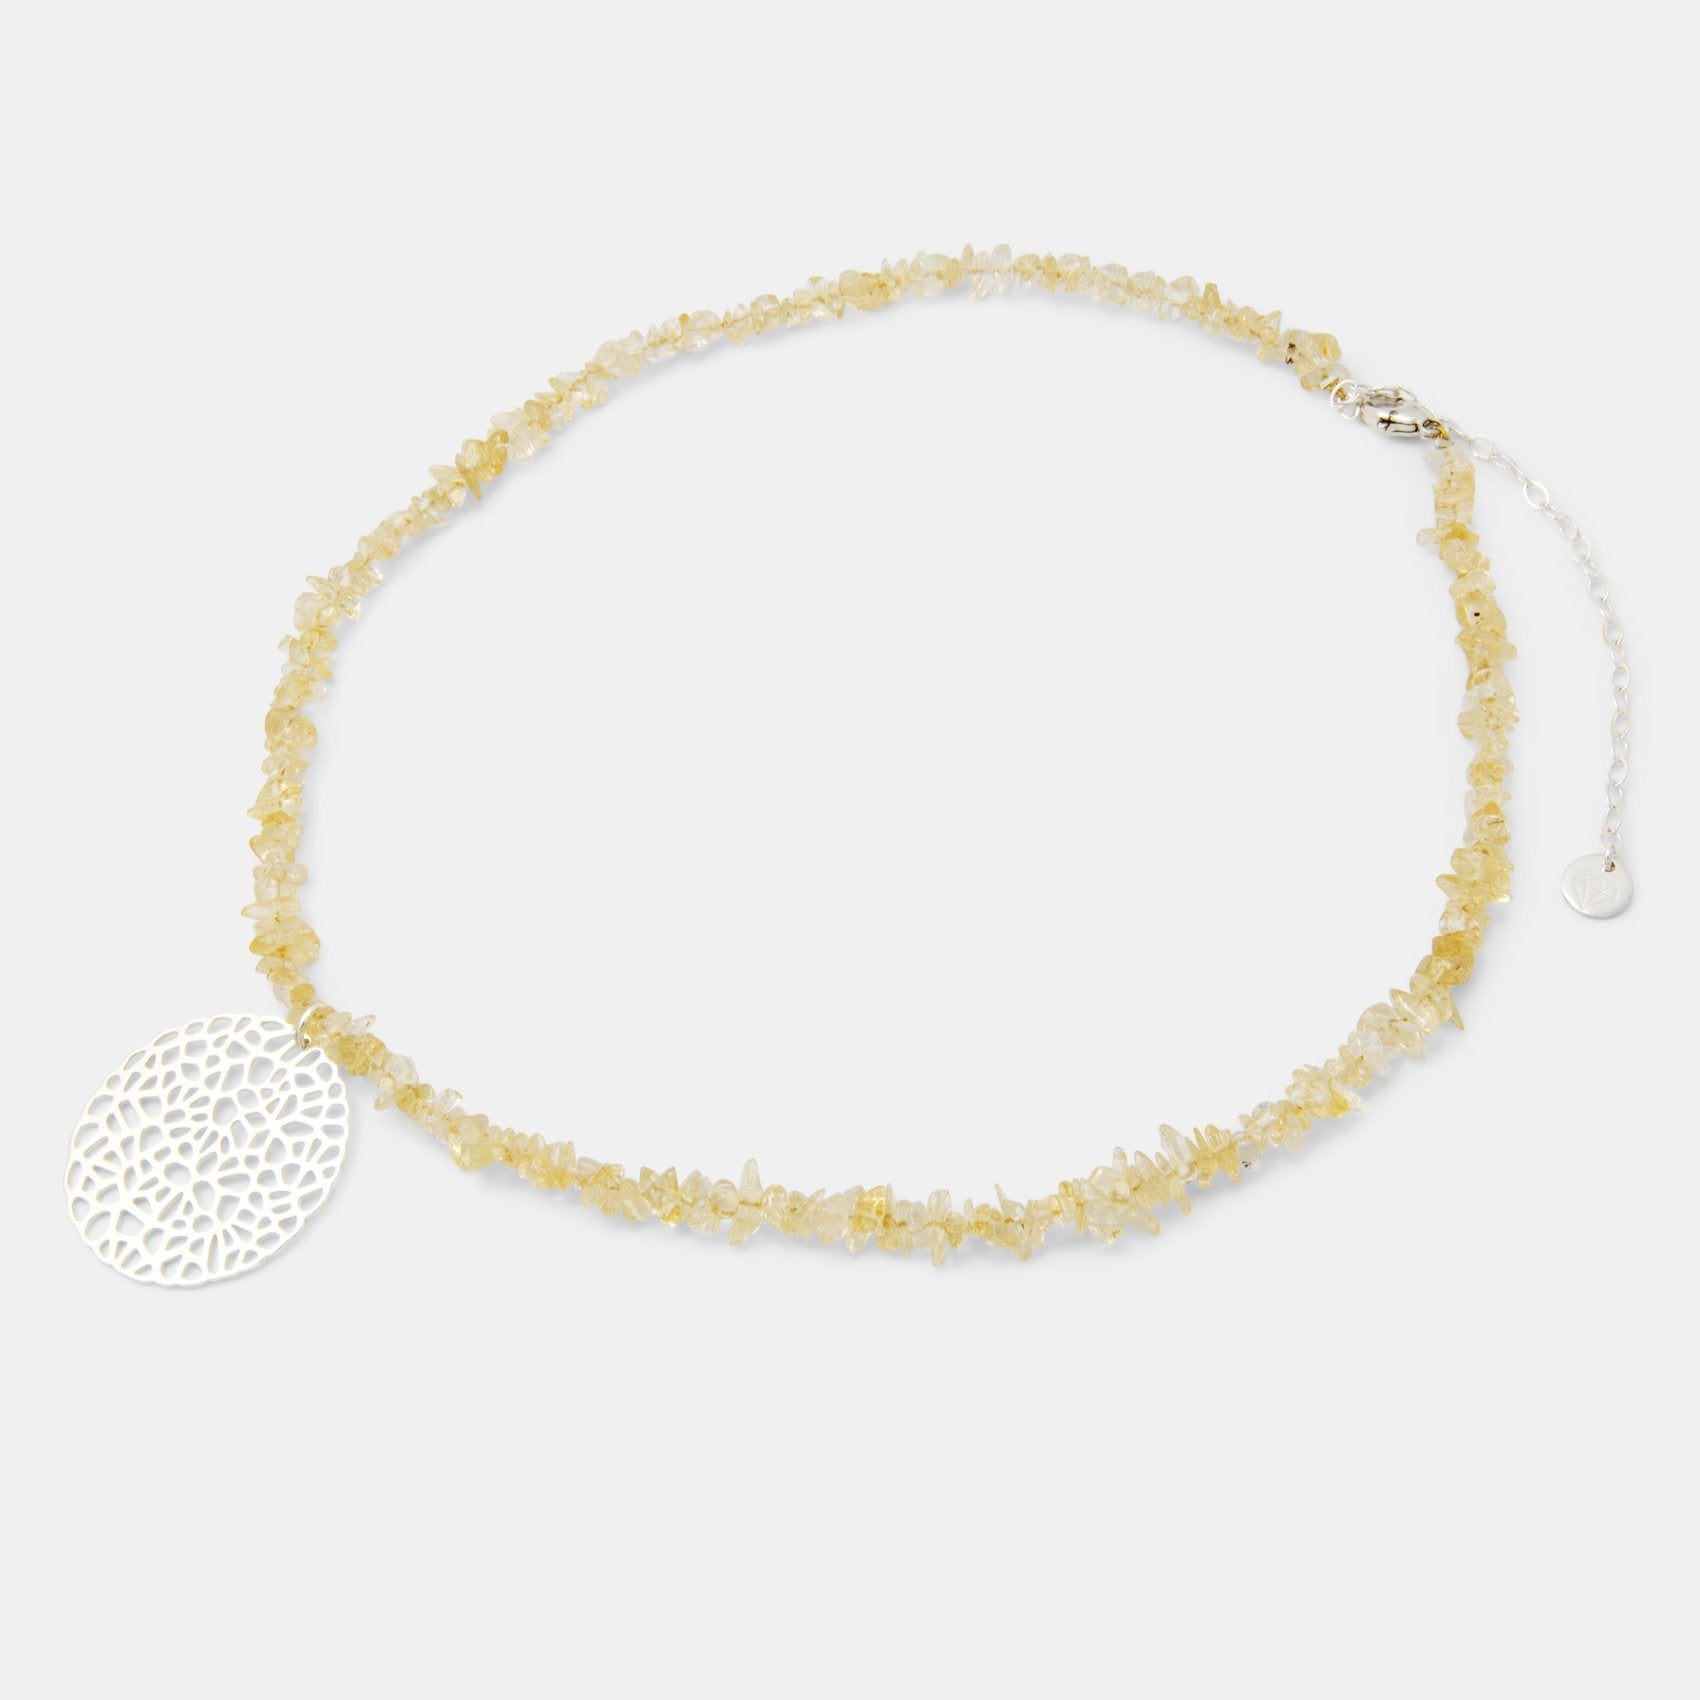 Coral pendant on citrine beaded necklace - Simone Walsh Jewellery Australia